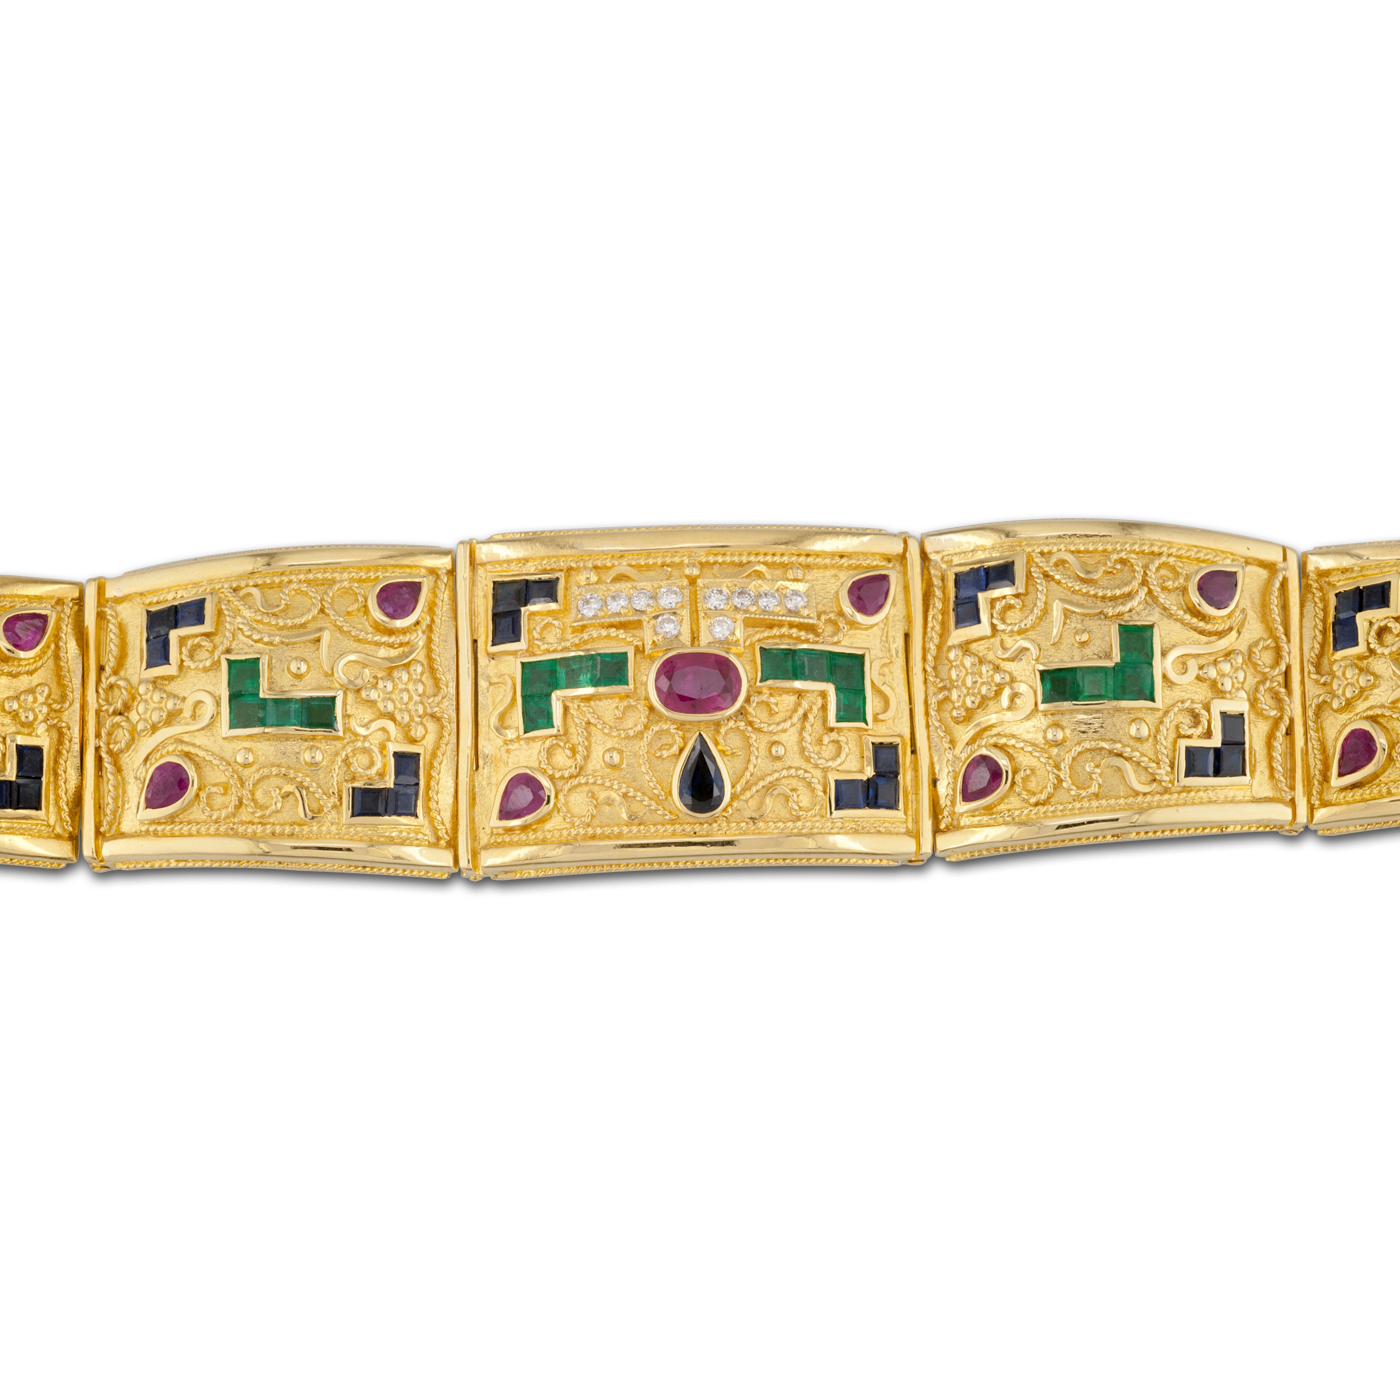 18k elegant jewellery gold jewelry precious stones animal κοσμήματα κοσμηματα κόσμημα κοσμημα χρυσα πολίτιμοι πολιτιμοι λιθοι λίθοι bracelet βραχιόλι βυζαντινό imperial